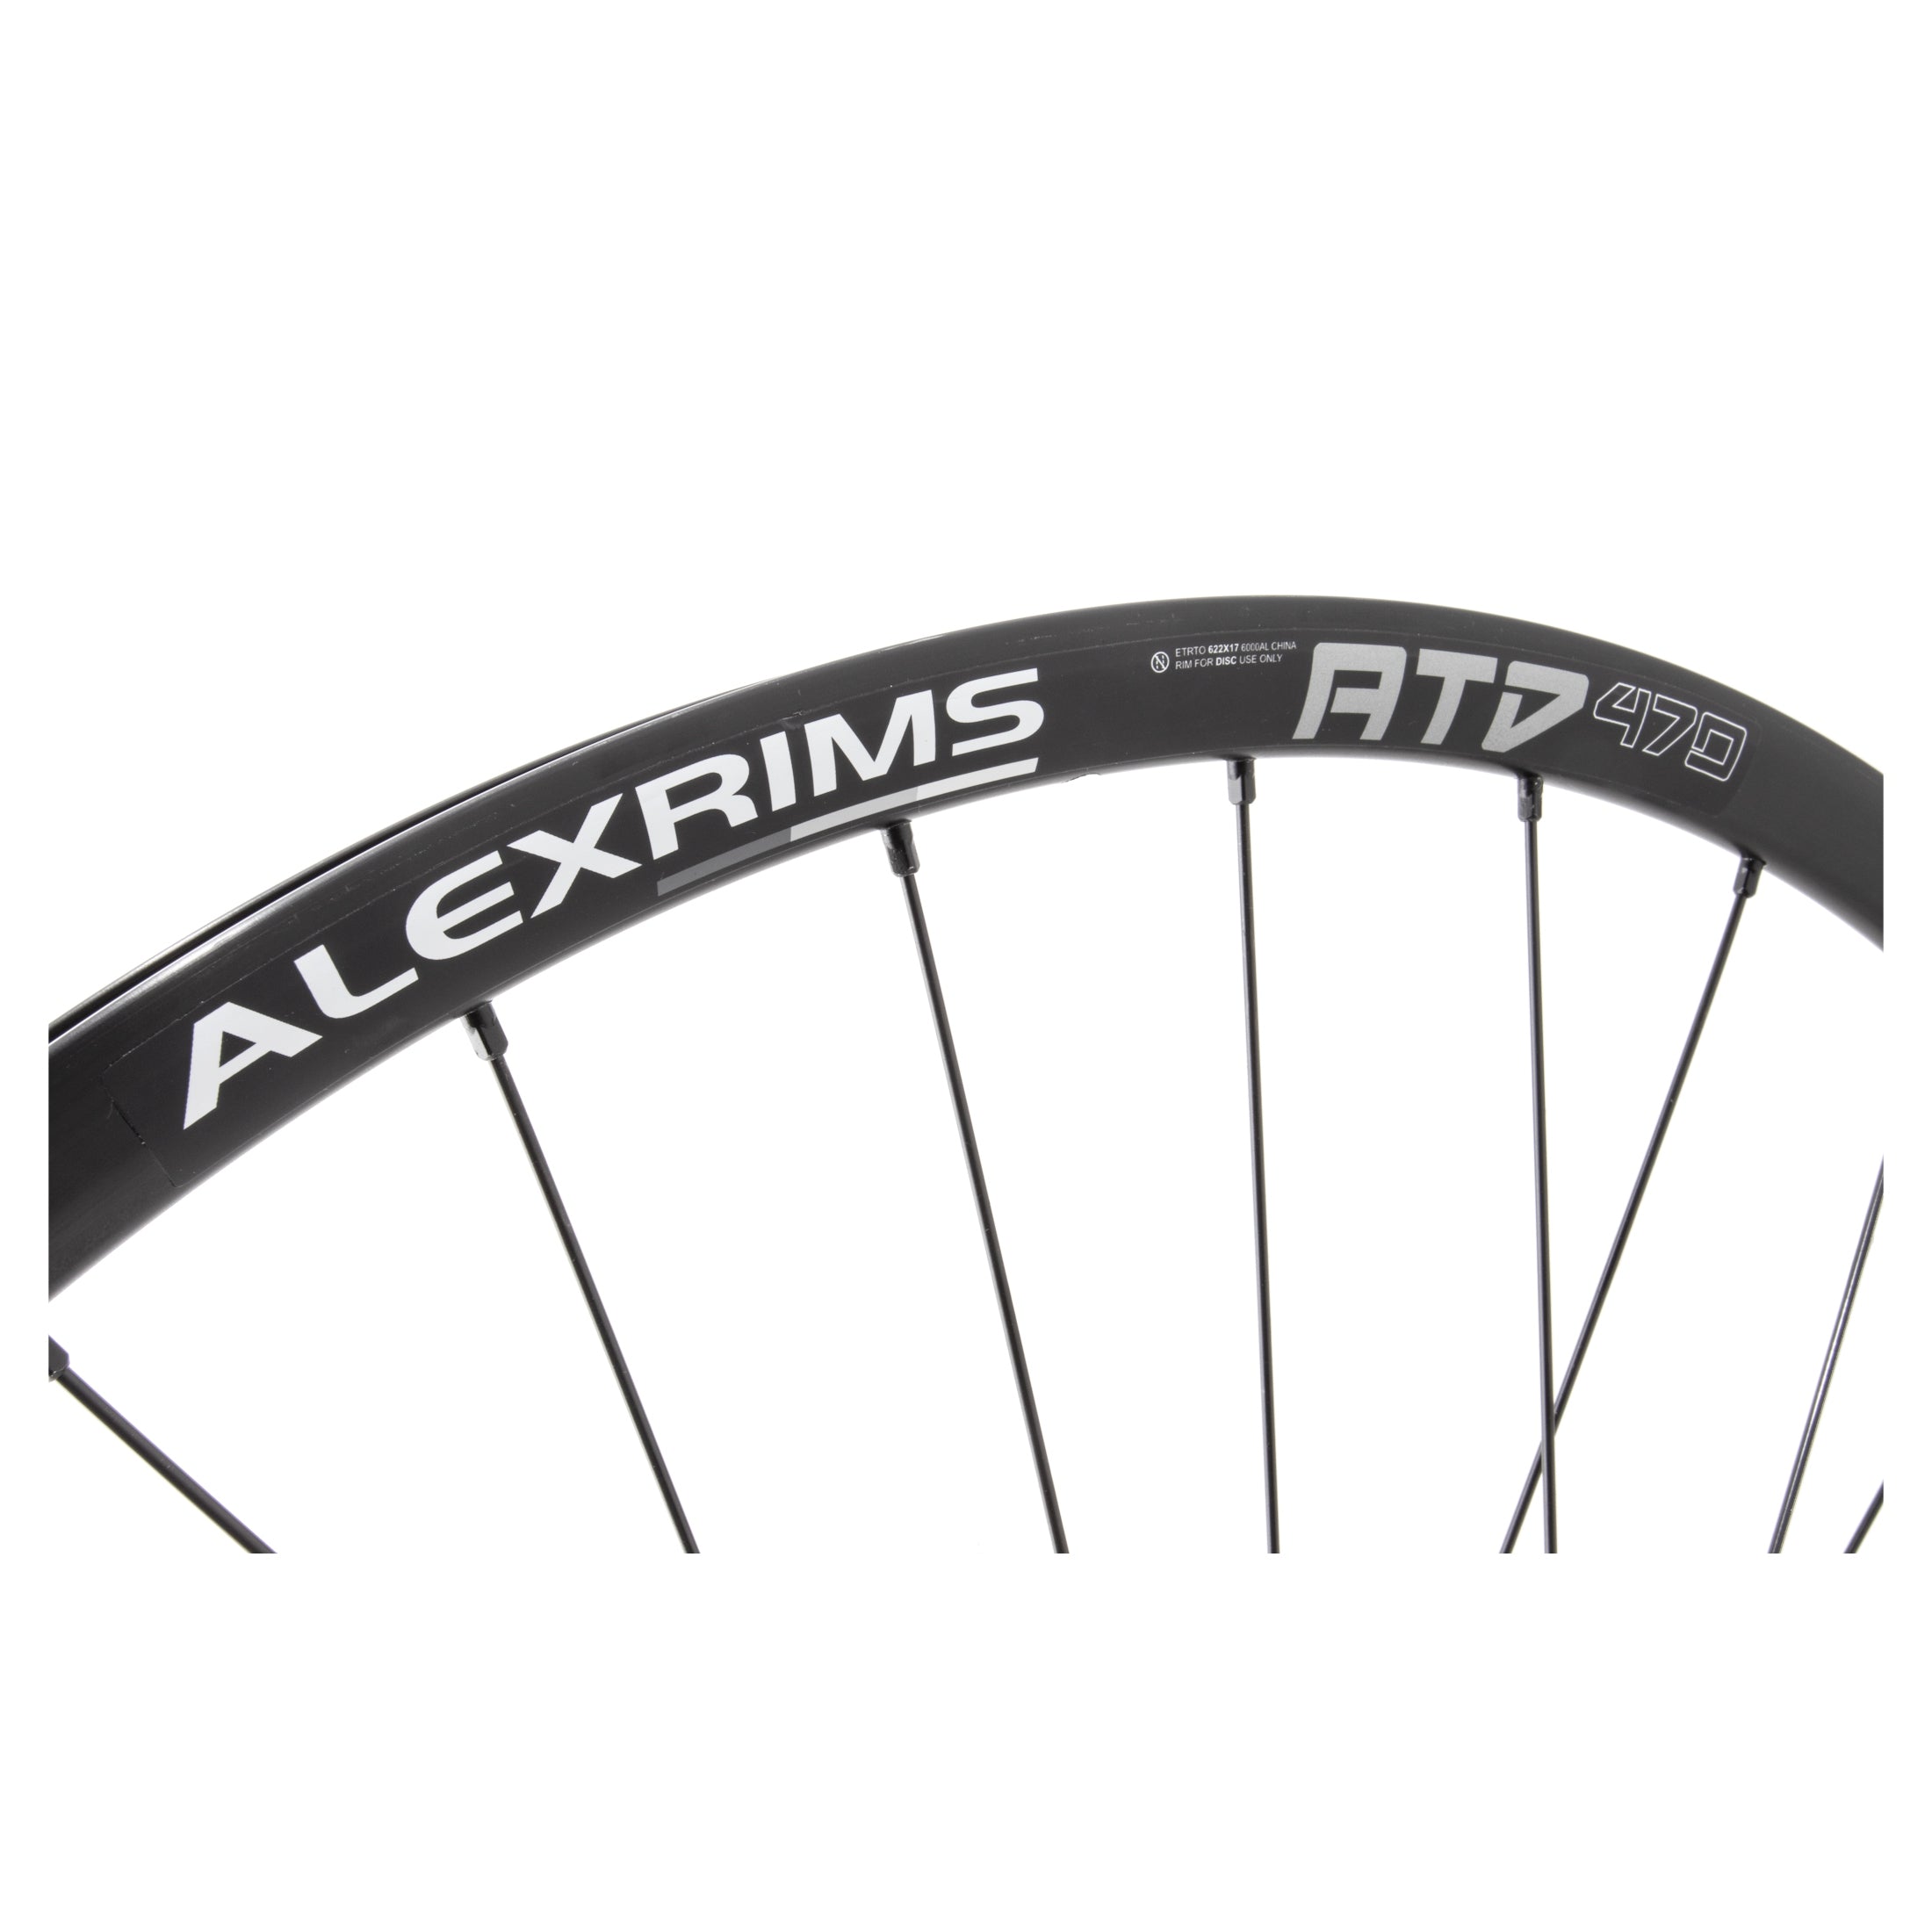 WheelMaster Alex ATD470 700c Disc Gravel Wheel - Front